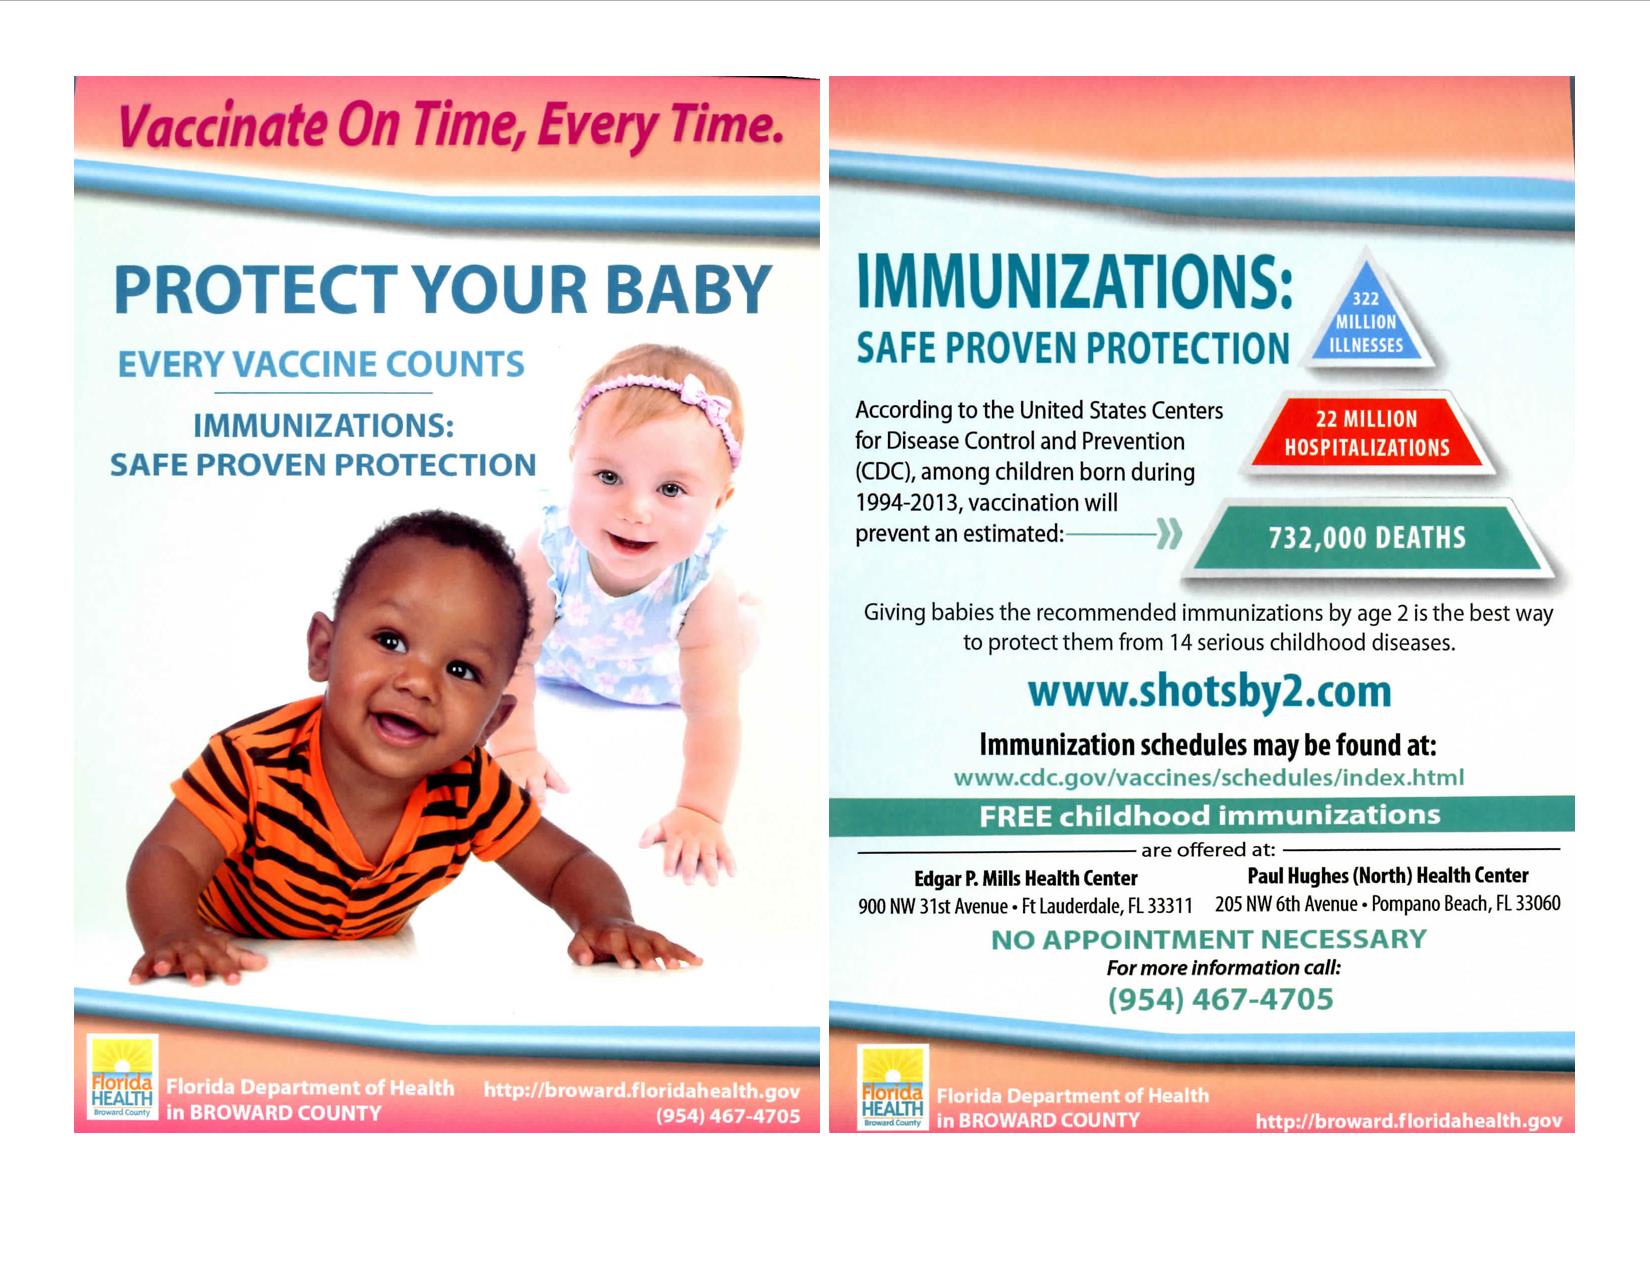 Shots by 2 Immunization Program